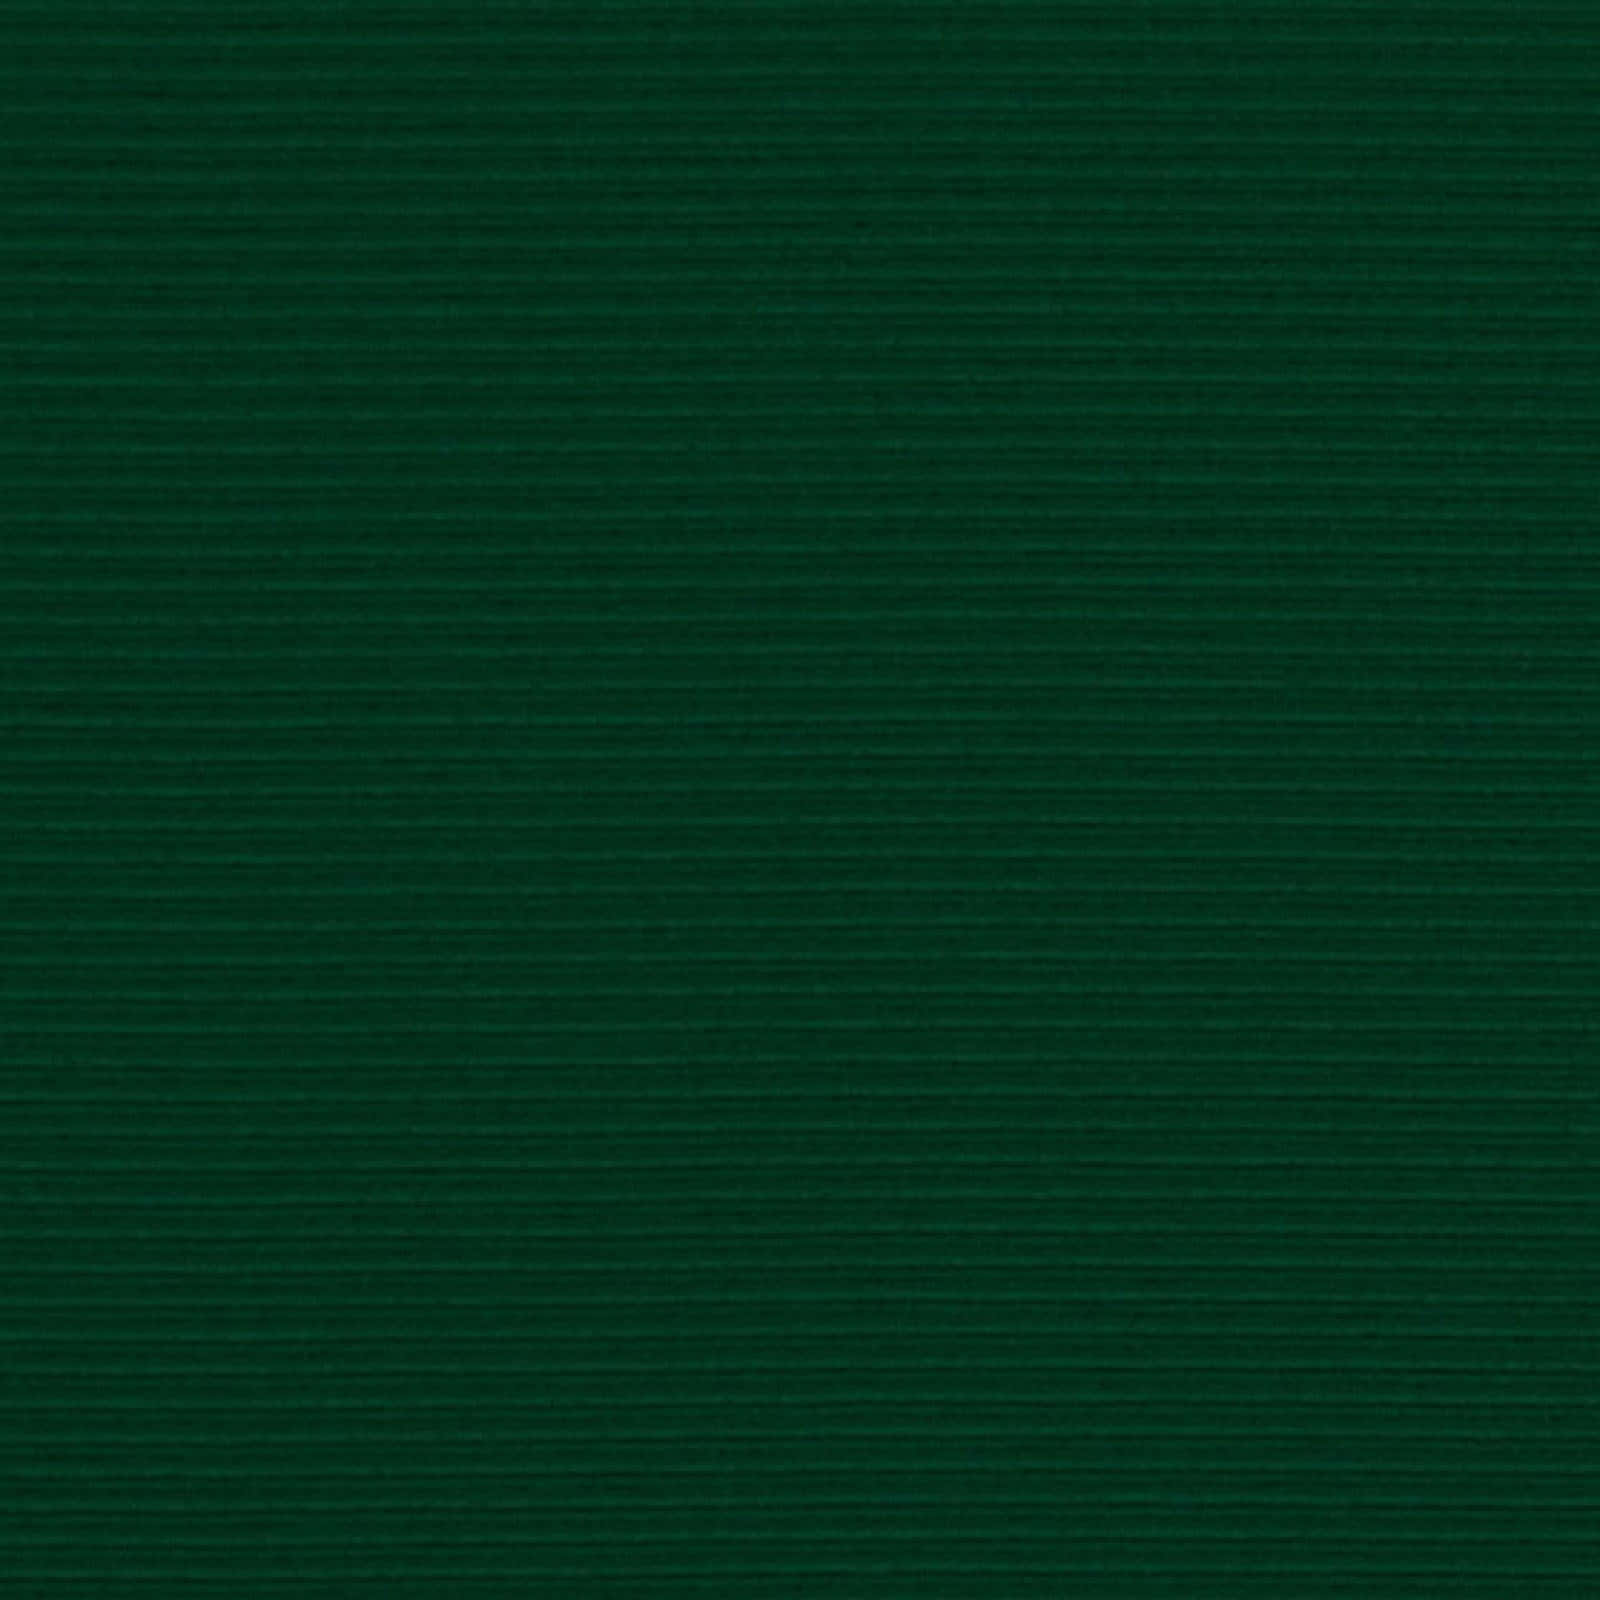 Vibrant Green Textured Background Wallpaper